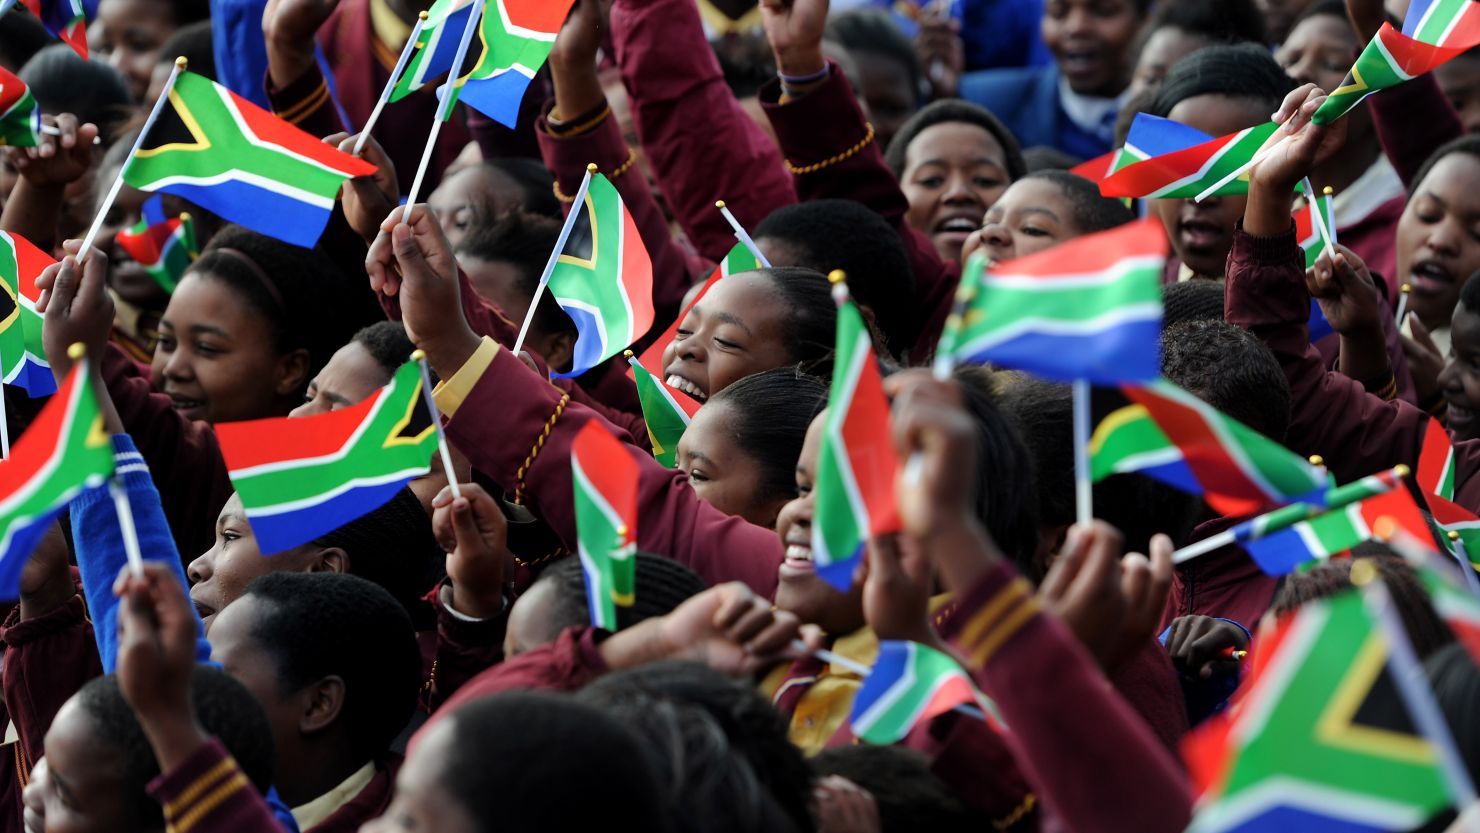 School kids from the Milton Mbekela school in South Africa wave flags.